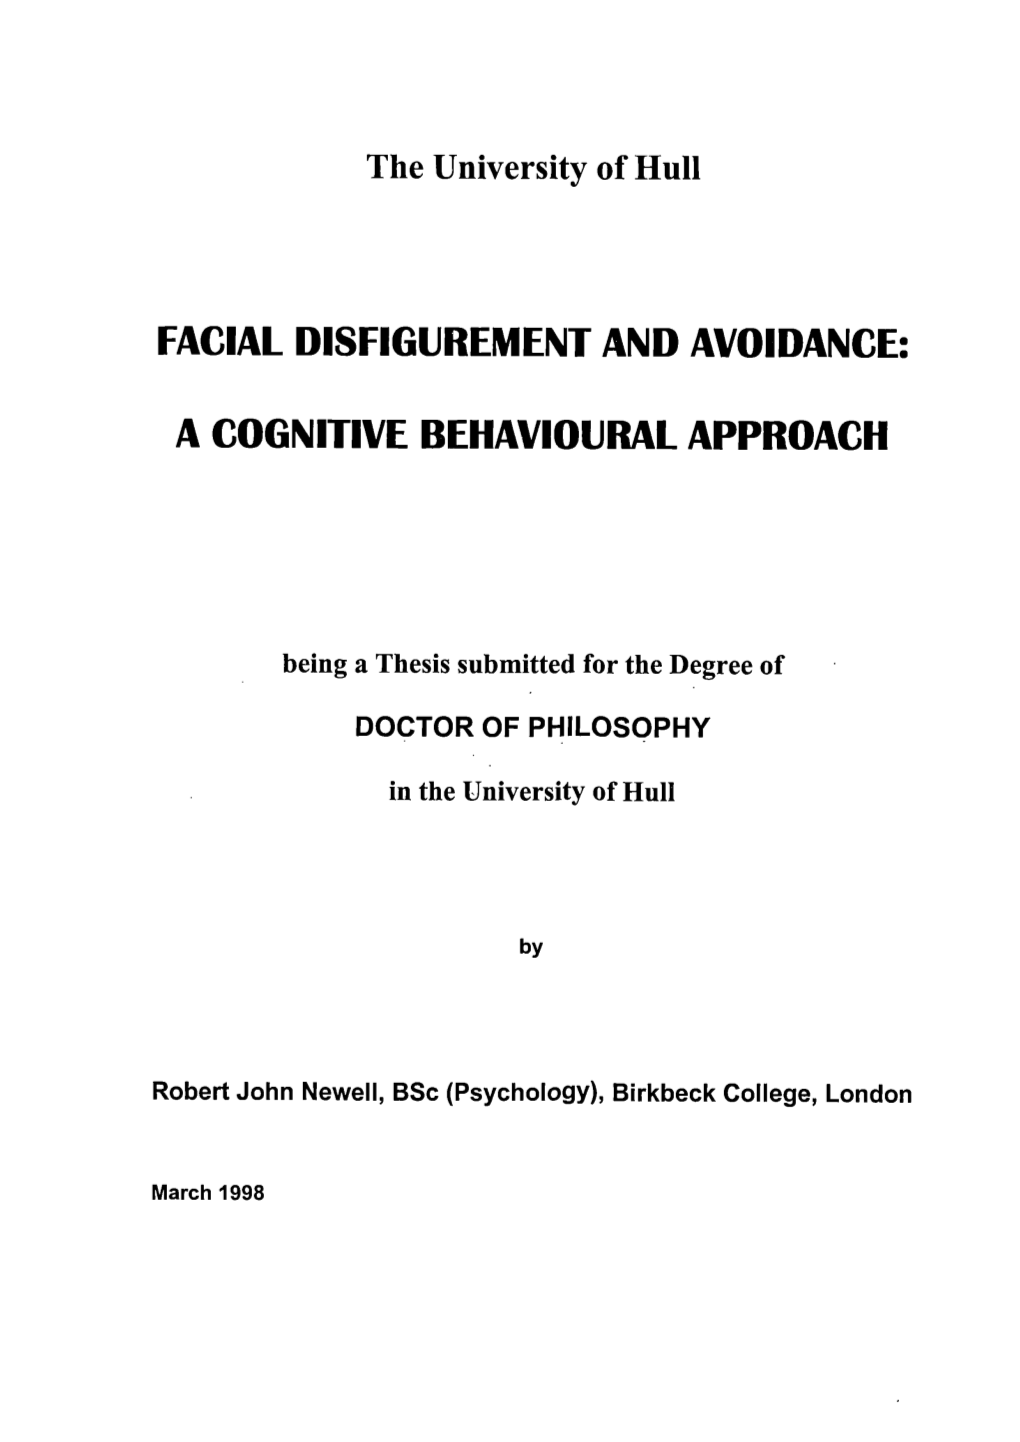 Facial Disfigurement and Avoidance